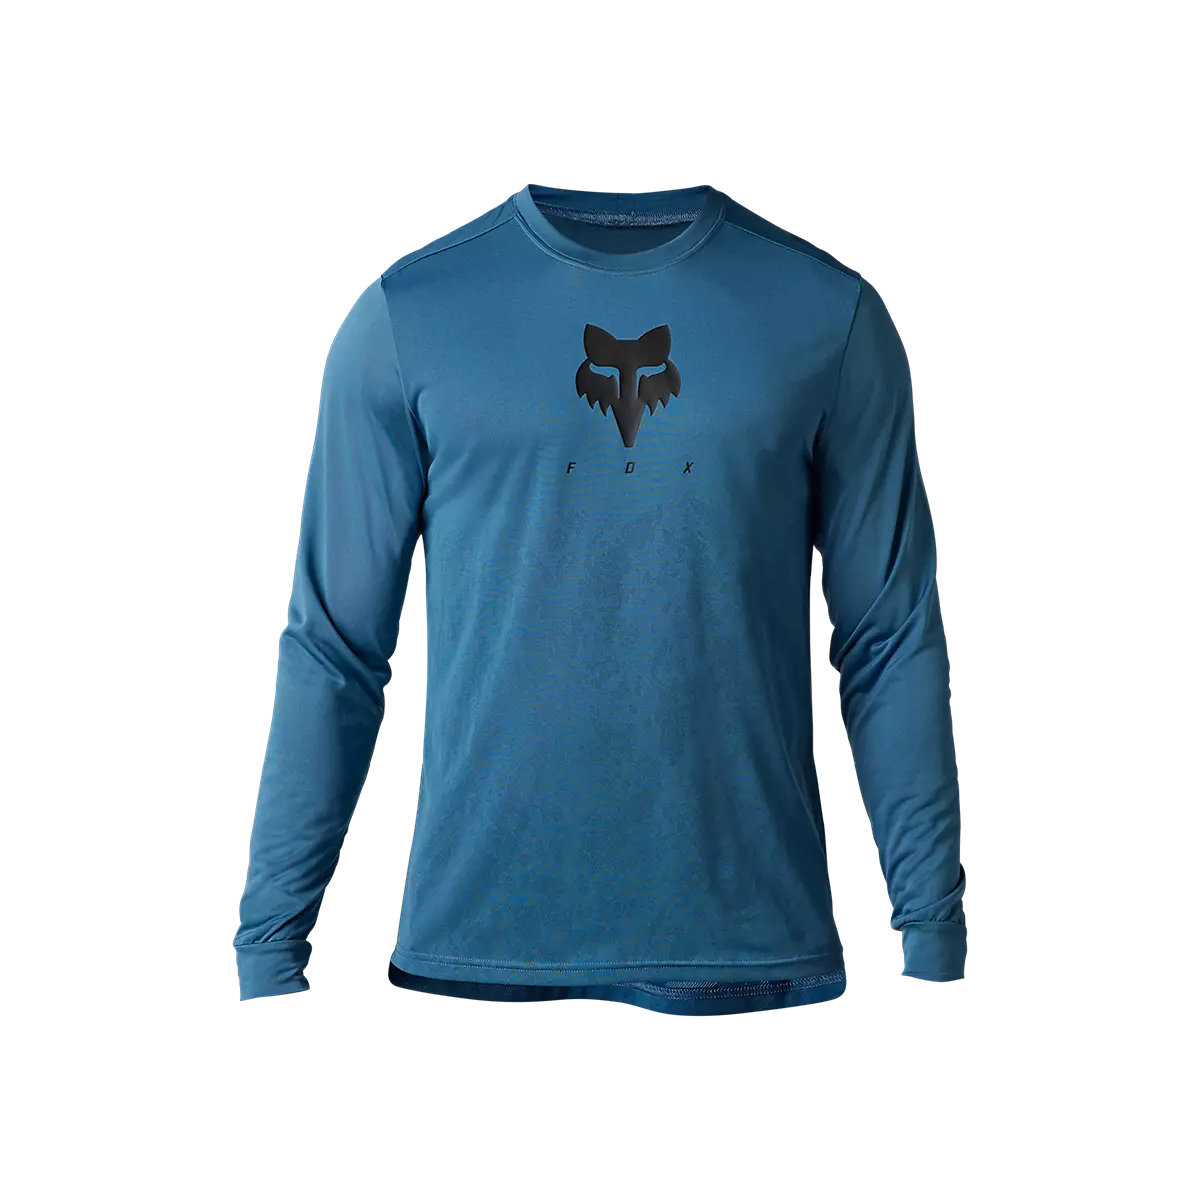 Camiseta de manga larga Fox Ranger Trudri en color azul con el logo fox nuevo en negro 30910-